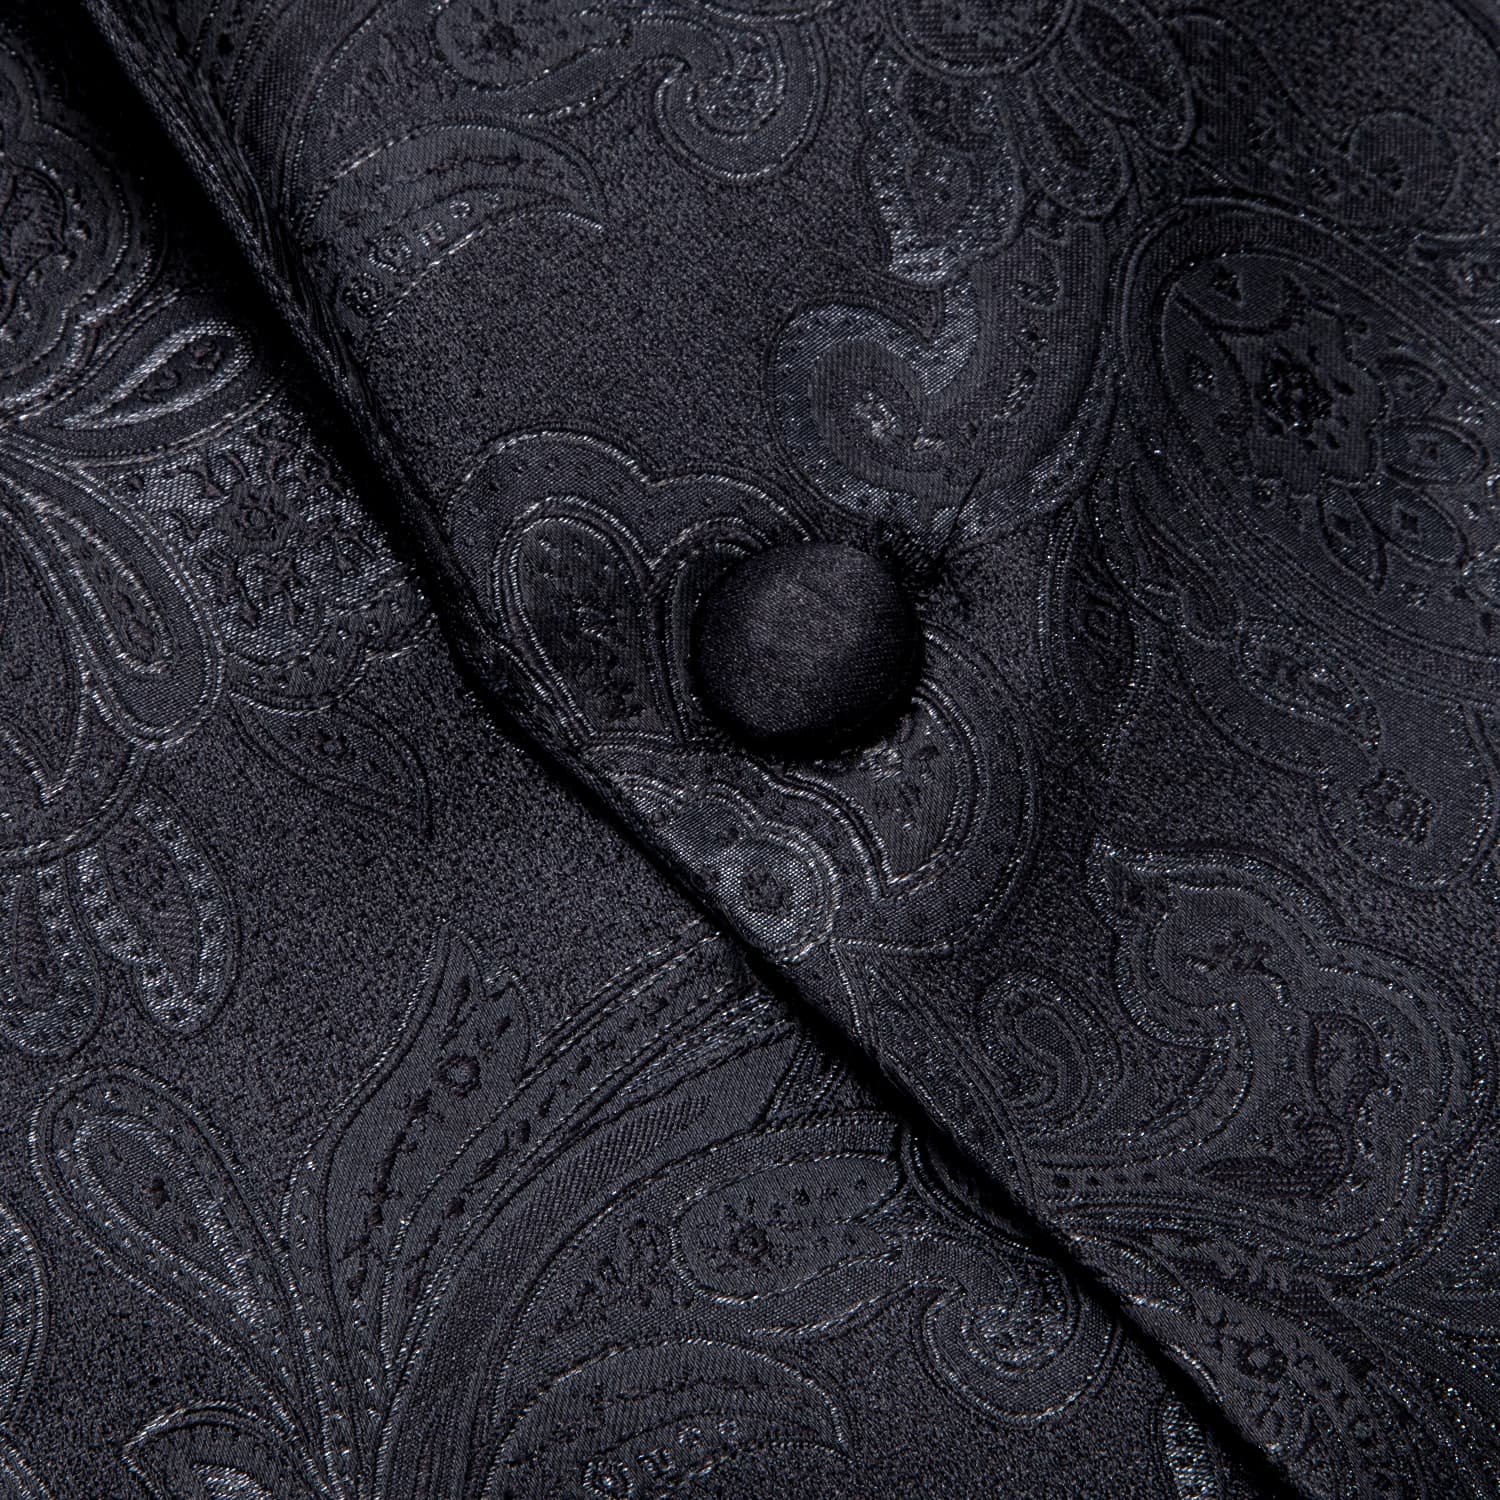 Hi-Tie Black Shawl Collar Black Floral Blazer Bowtie Suit Set